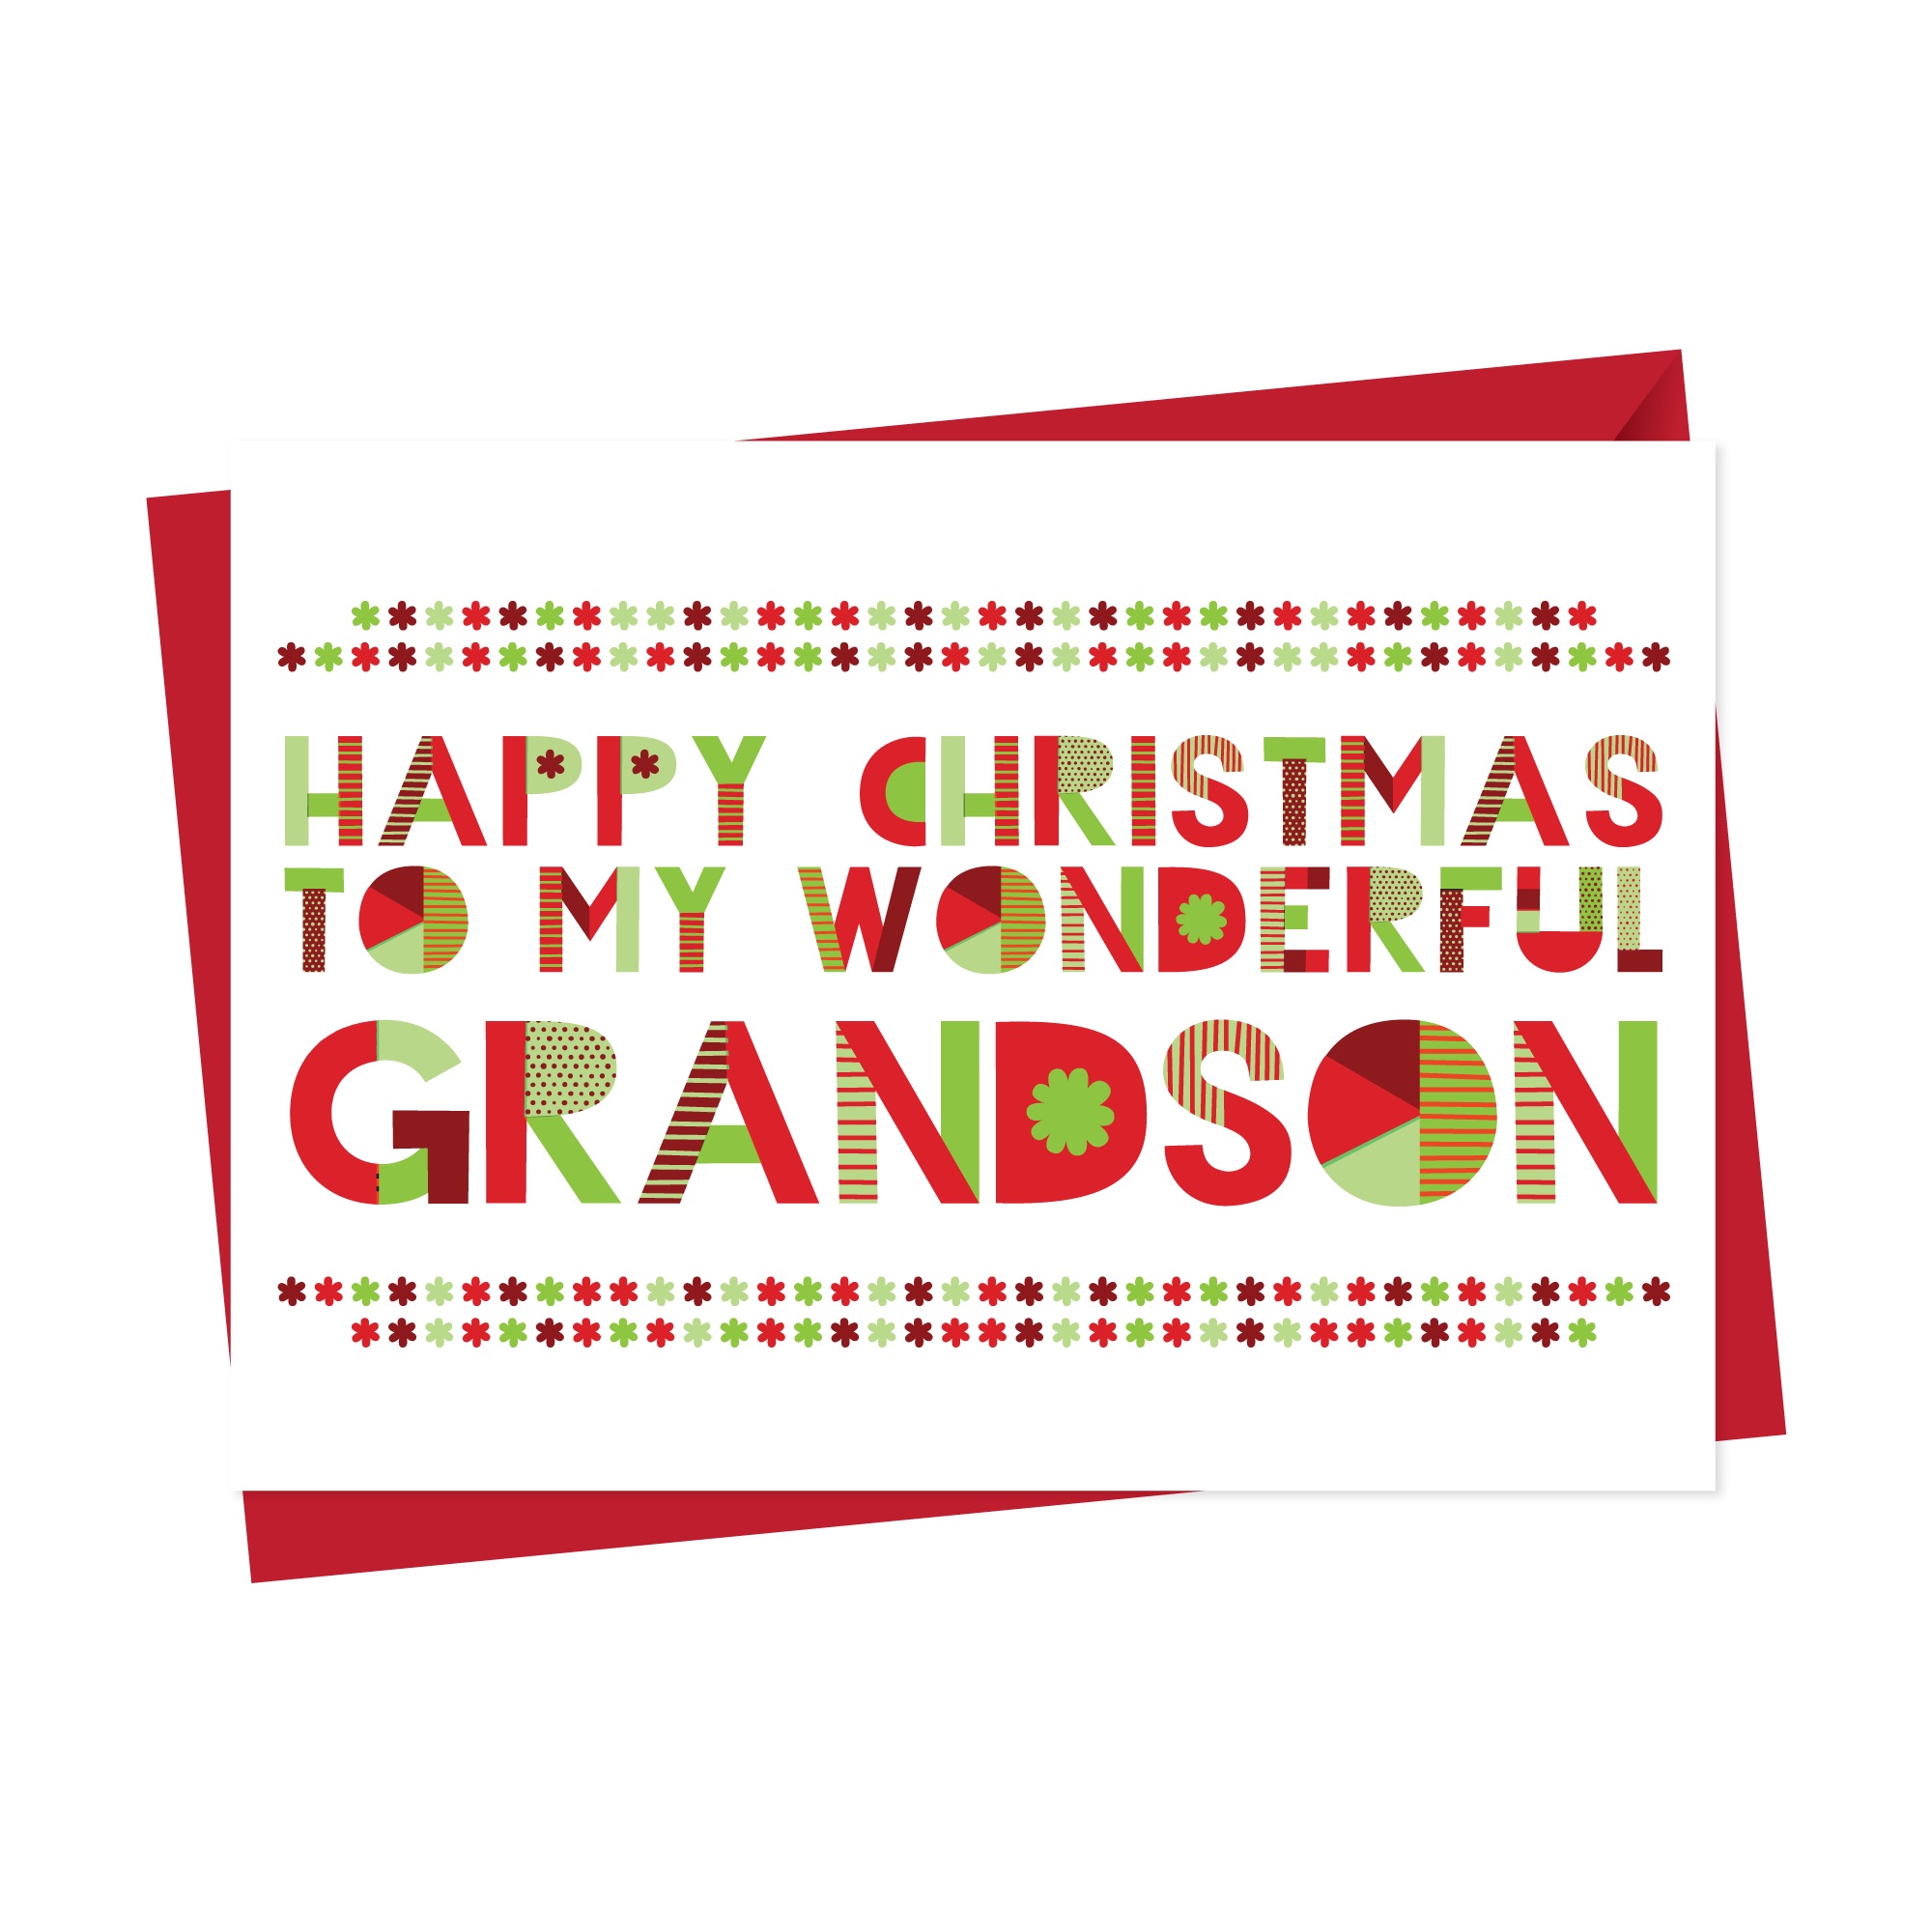 Wonderful Grandson Christmas Card